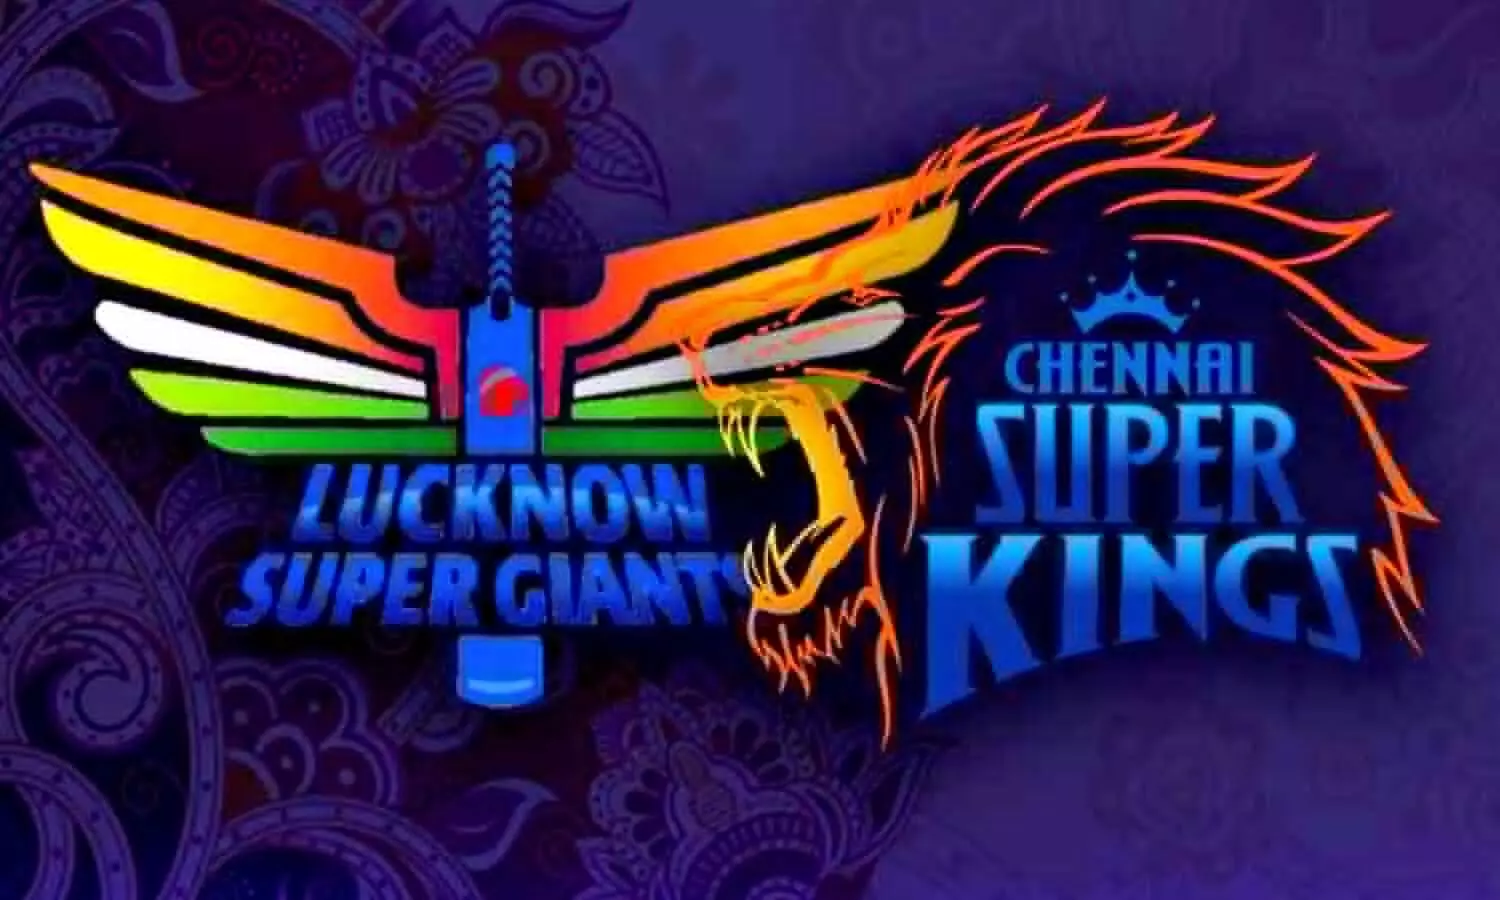 Chennai Super Kings Lucknow Super Giants